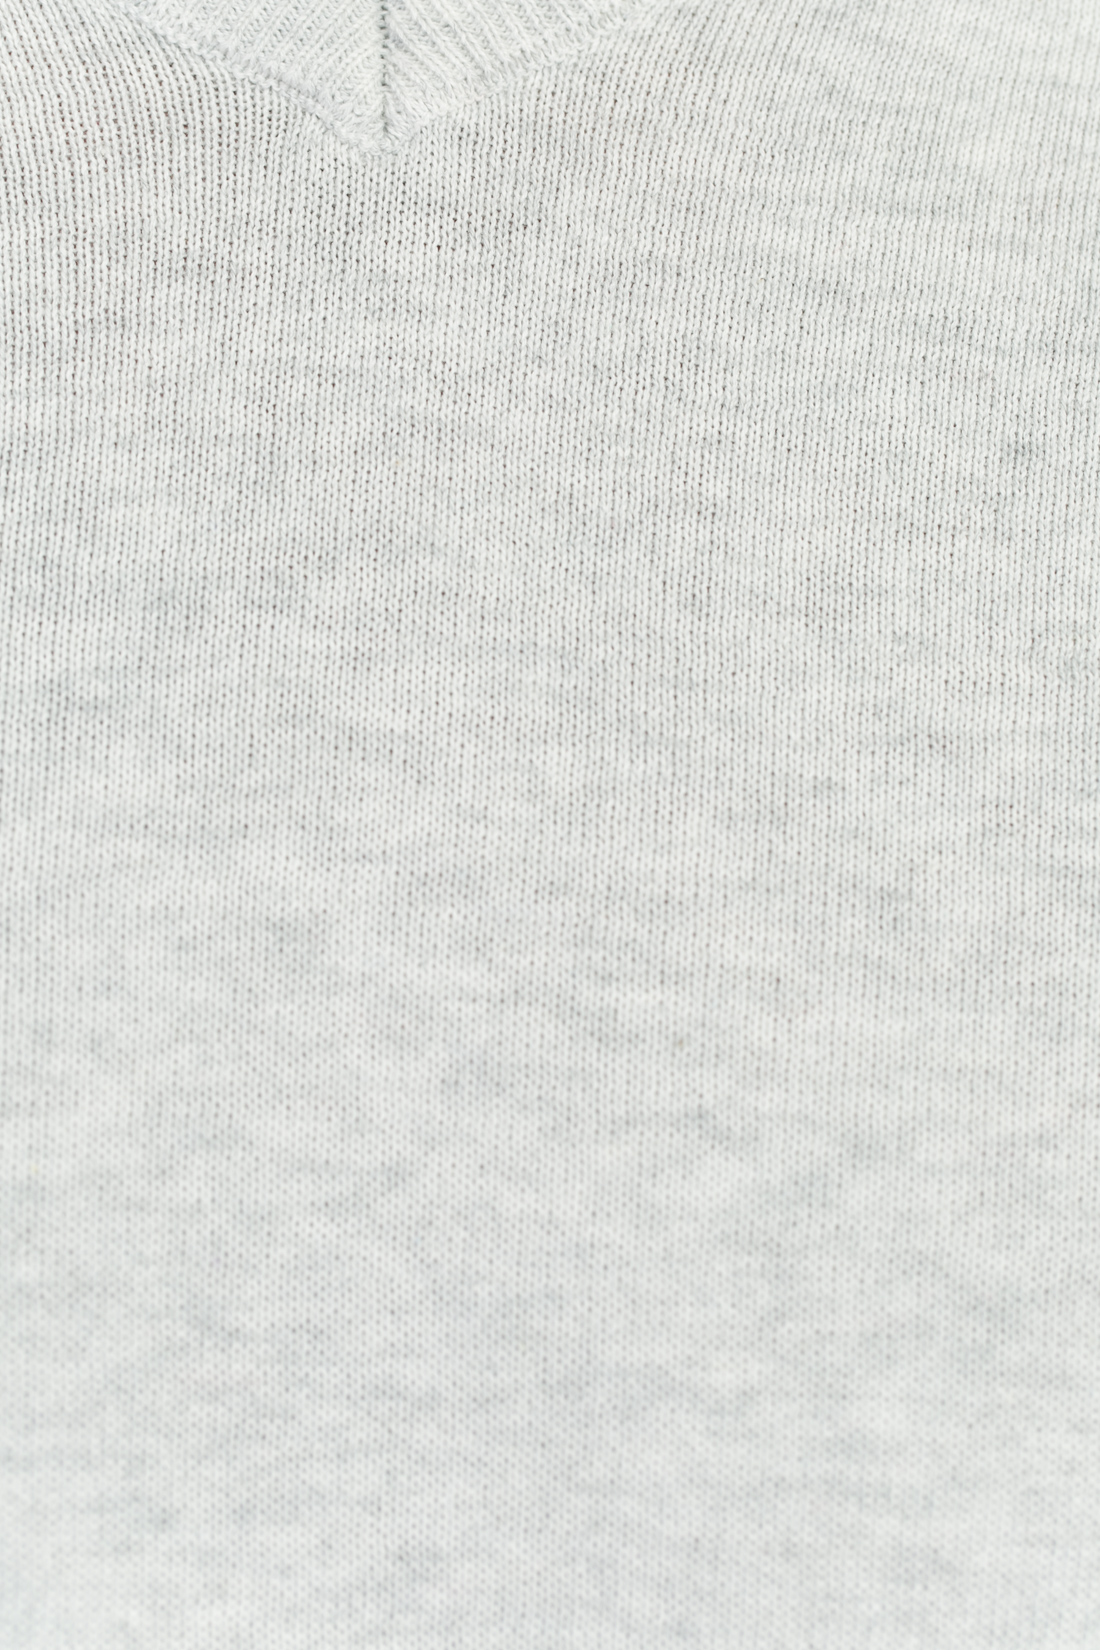 Базовый пуловер (арт. baon B637202), размер L, цвет light grey melange#серый Базовый пуловер (арт. baon B637202) - фото 3